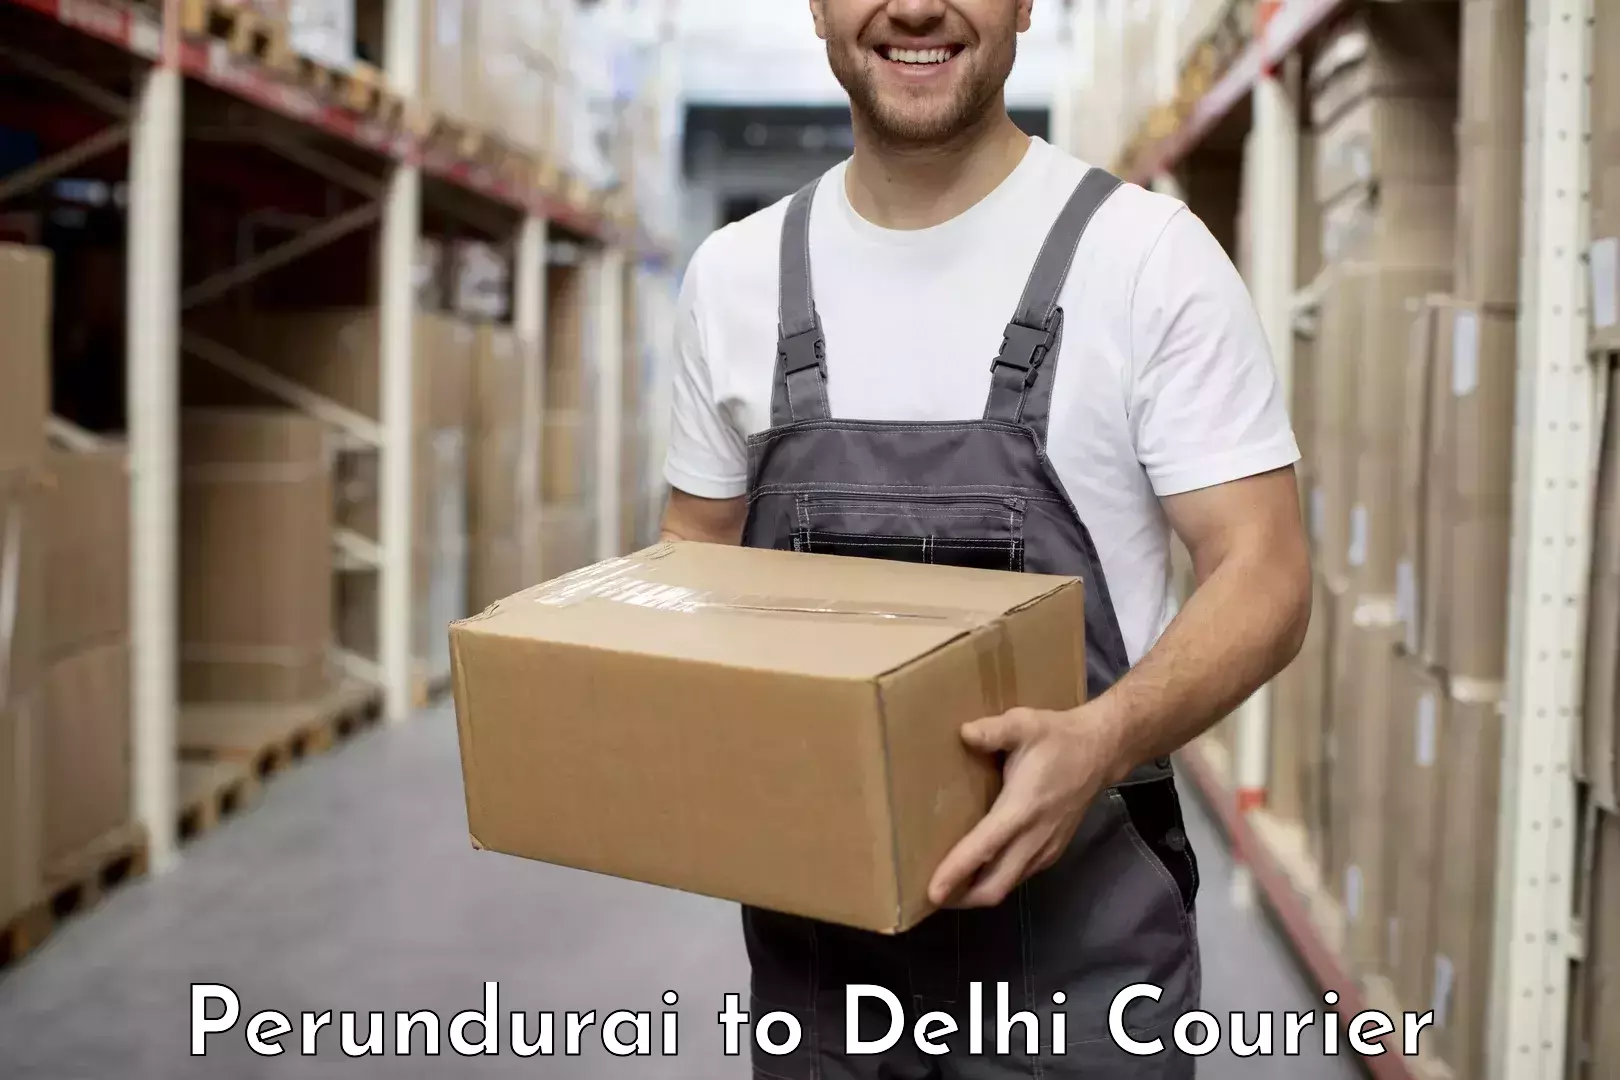 Global courier networks Perundurai to East Delhi